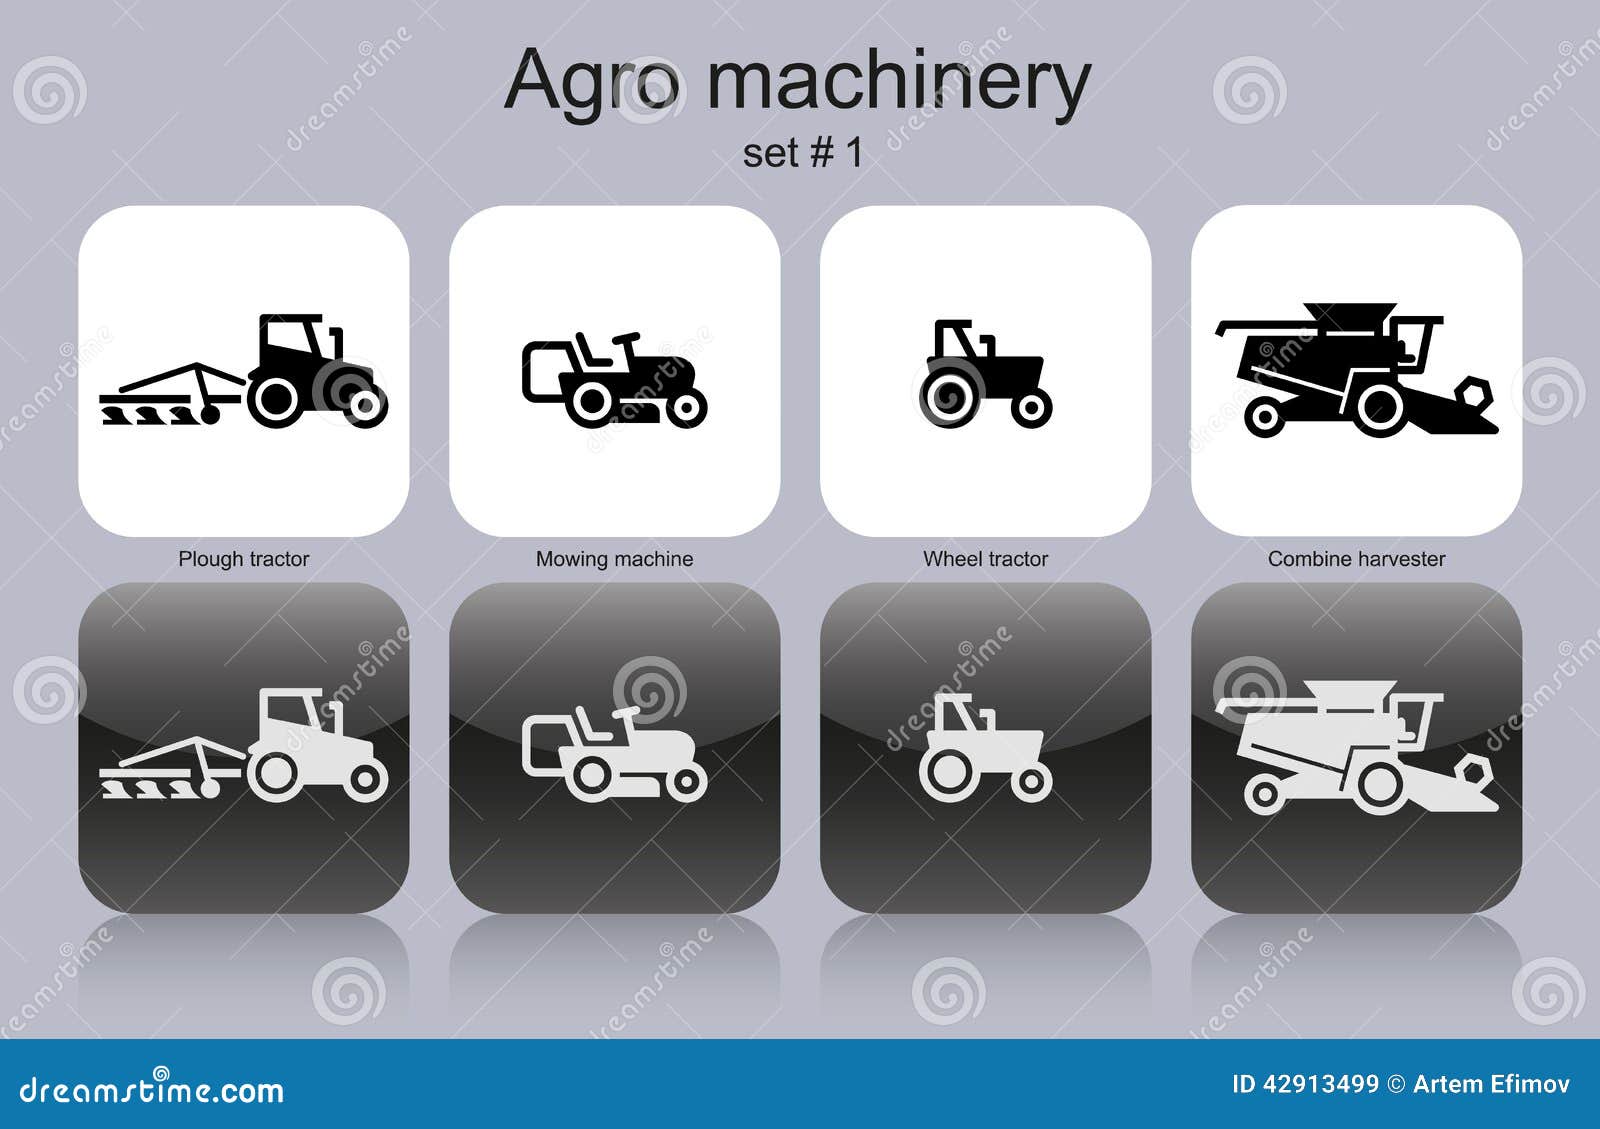 agro machinery icons